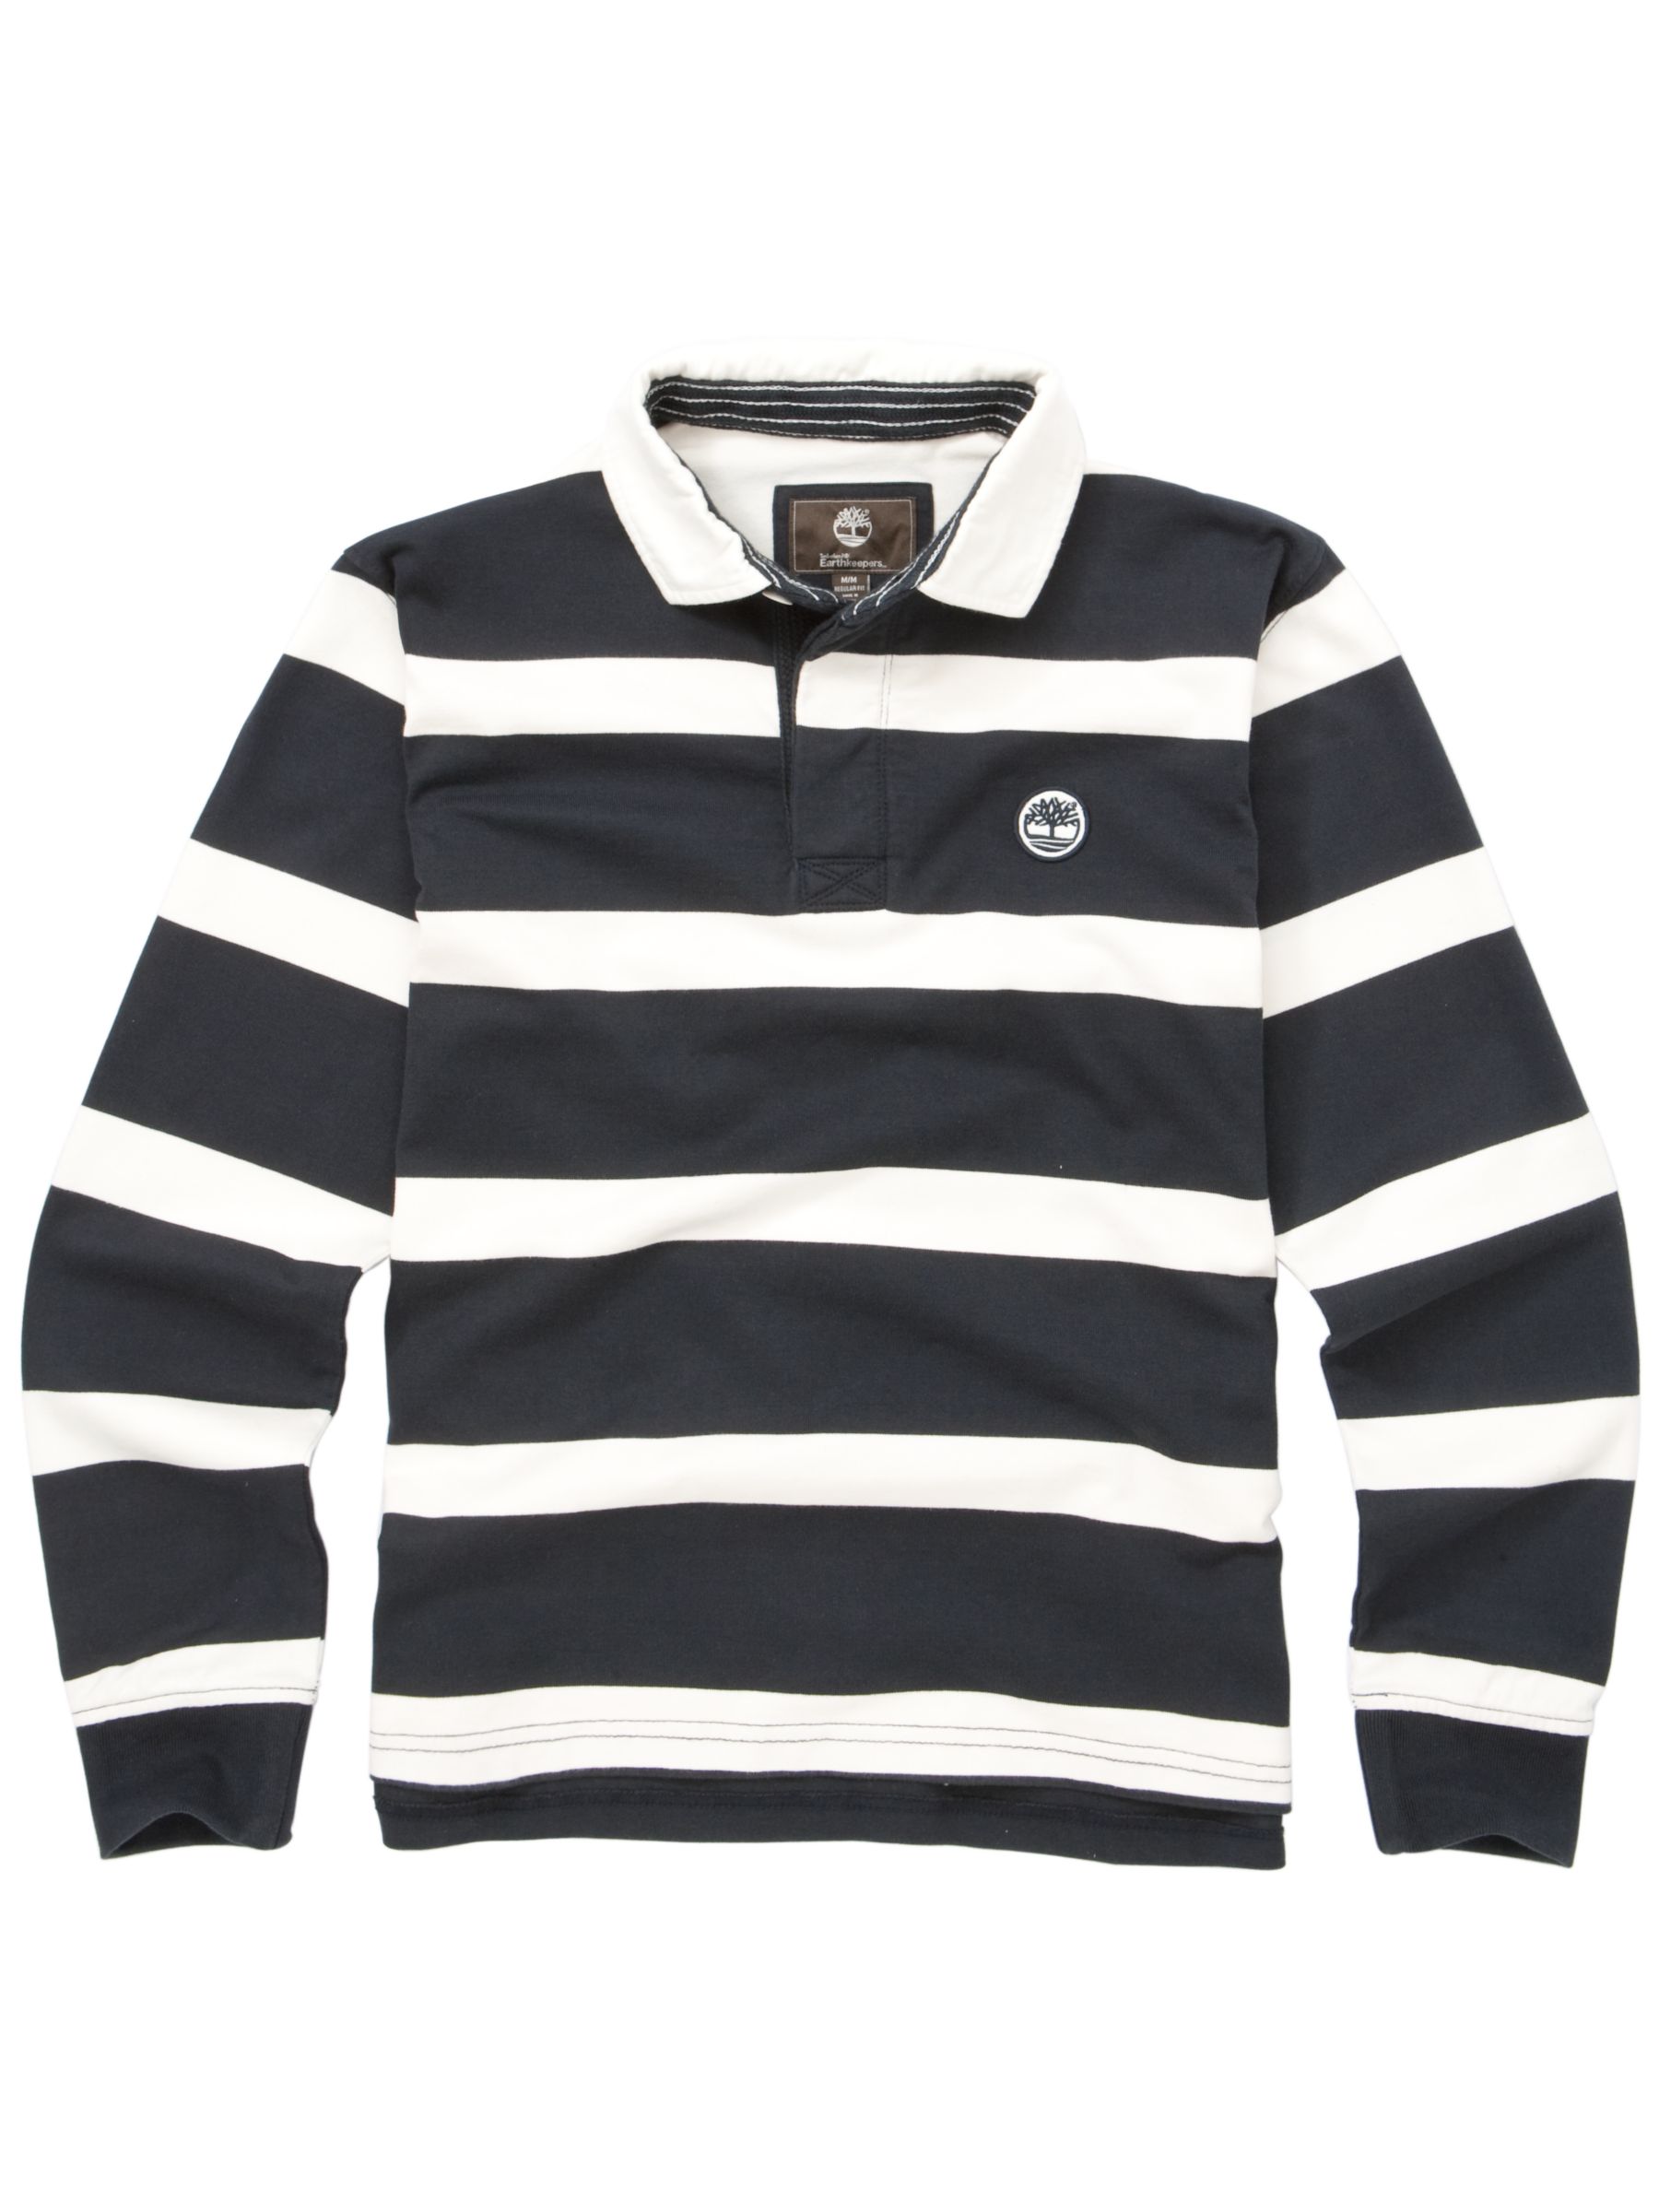 Stripe Rugby Shirt, Navy/white